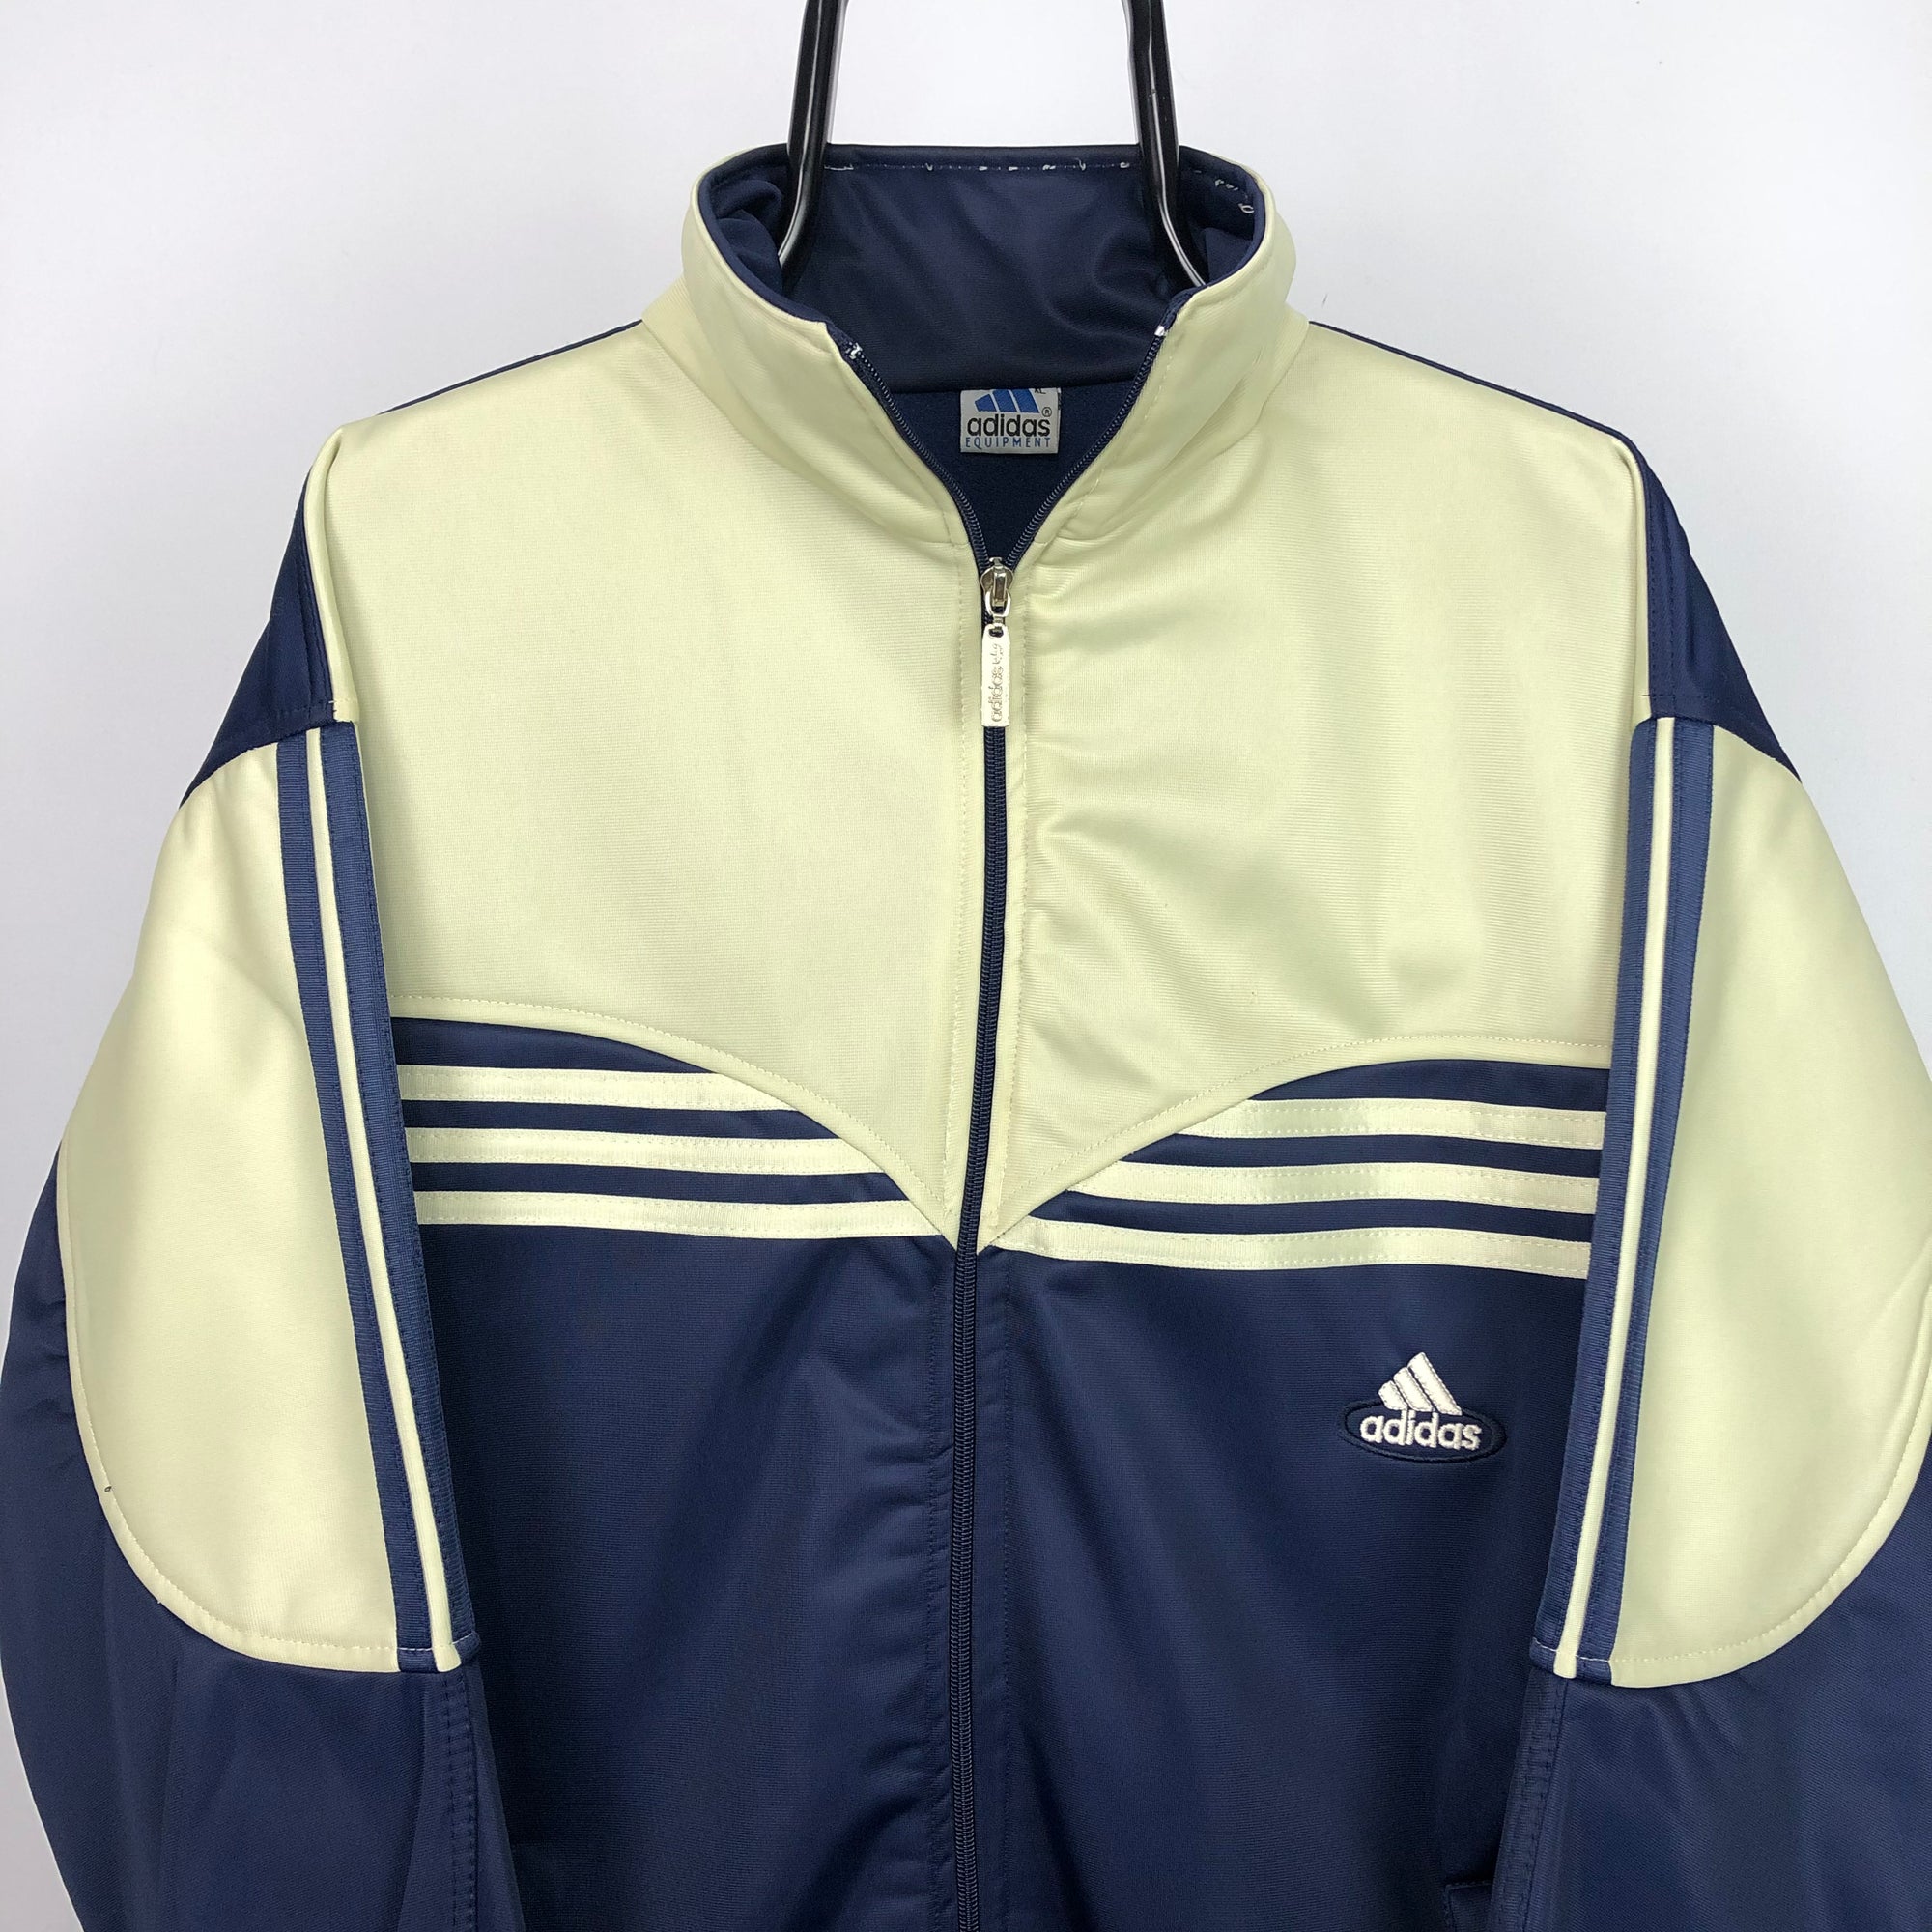 Vintage 90s Adidas Equipment Track Jacket in Beige/Navy - Men's Large/Women's XL